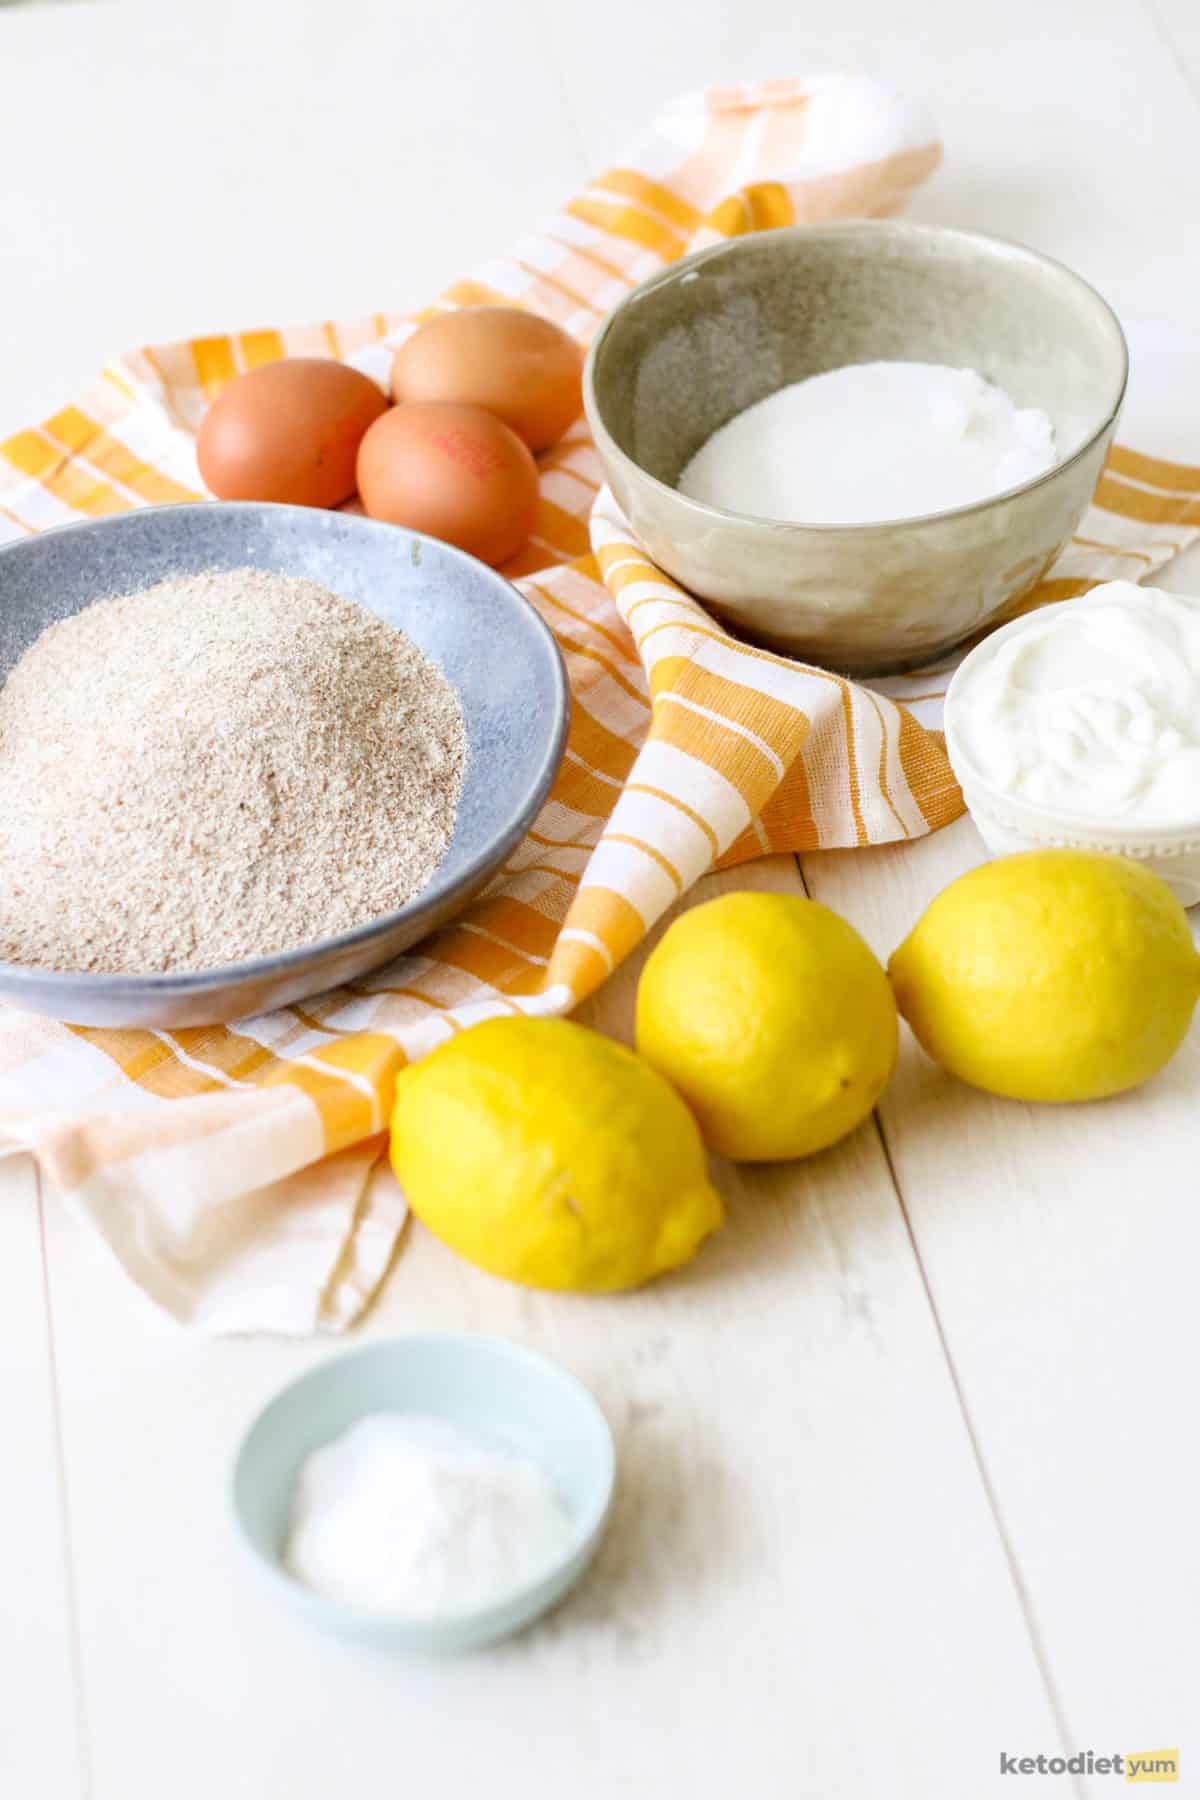 Ingredients arranged on a table to make keto lemon pound cake